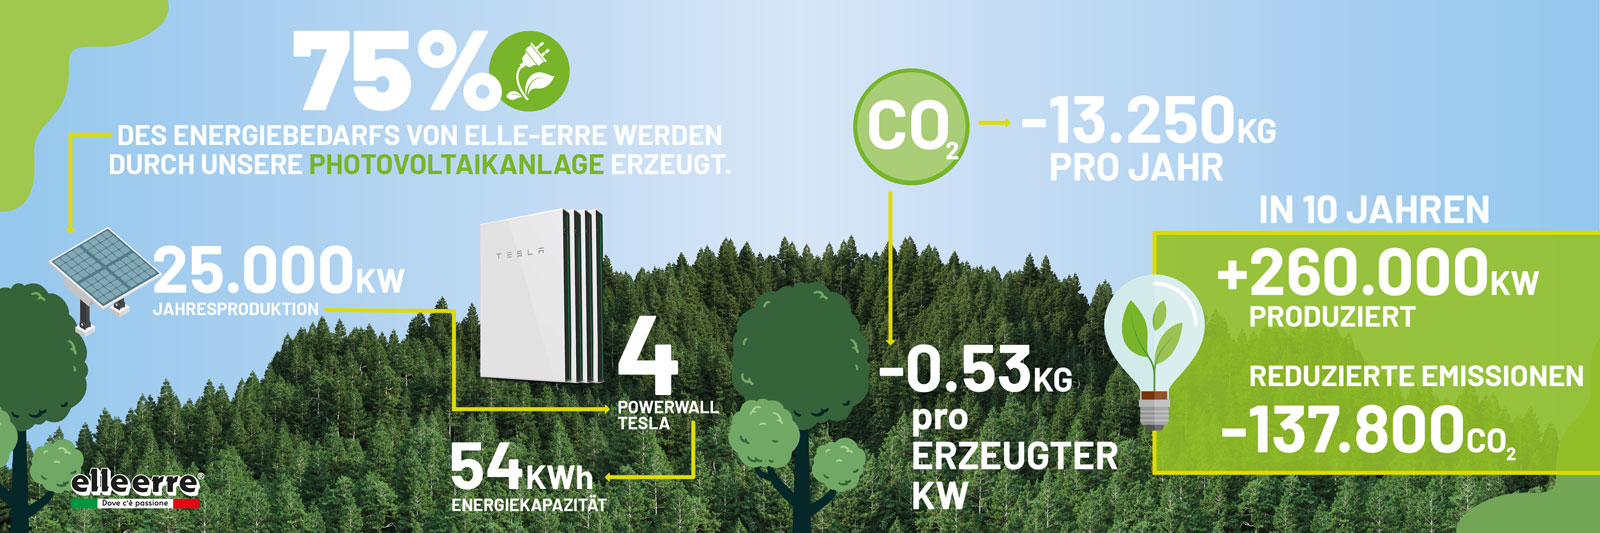 sostenibilità-elleerre-infographic-tedesco